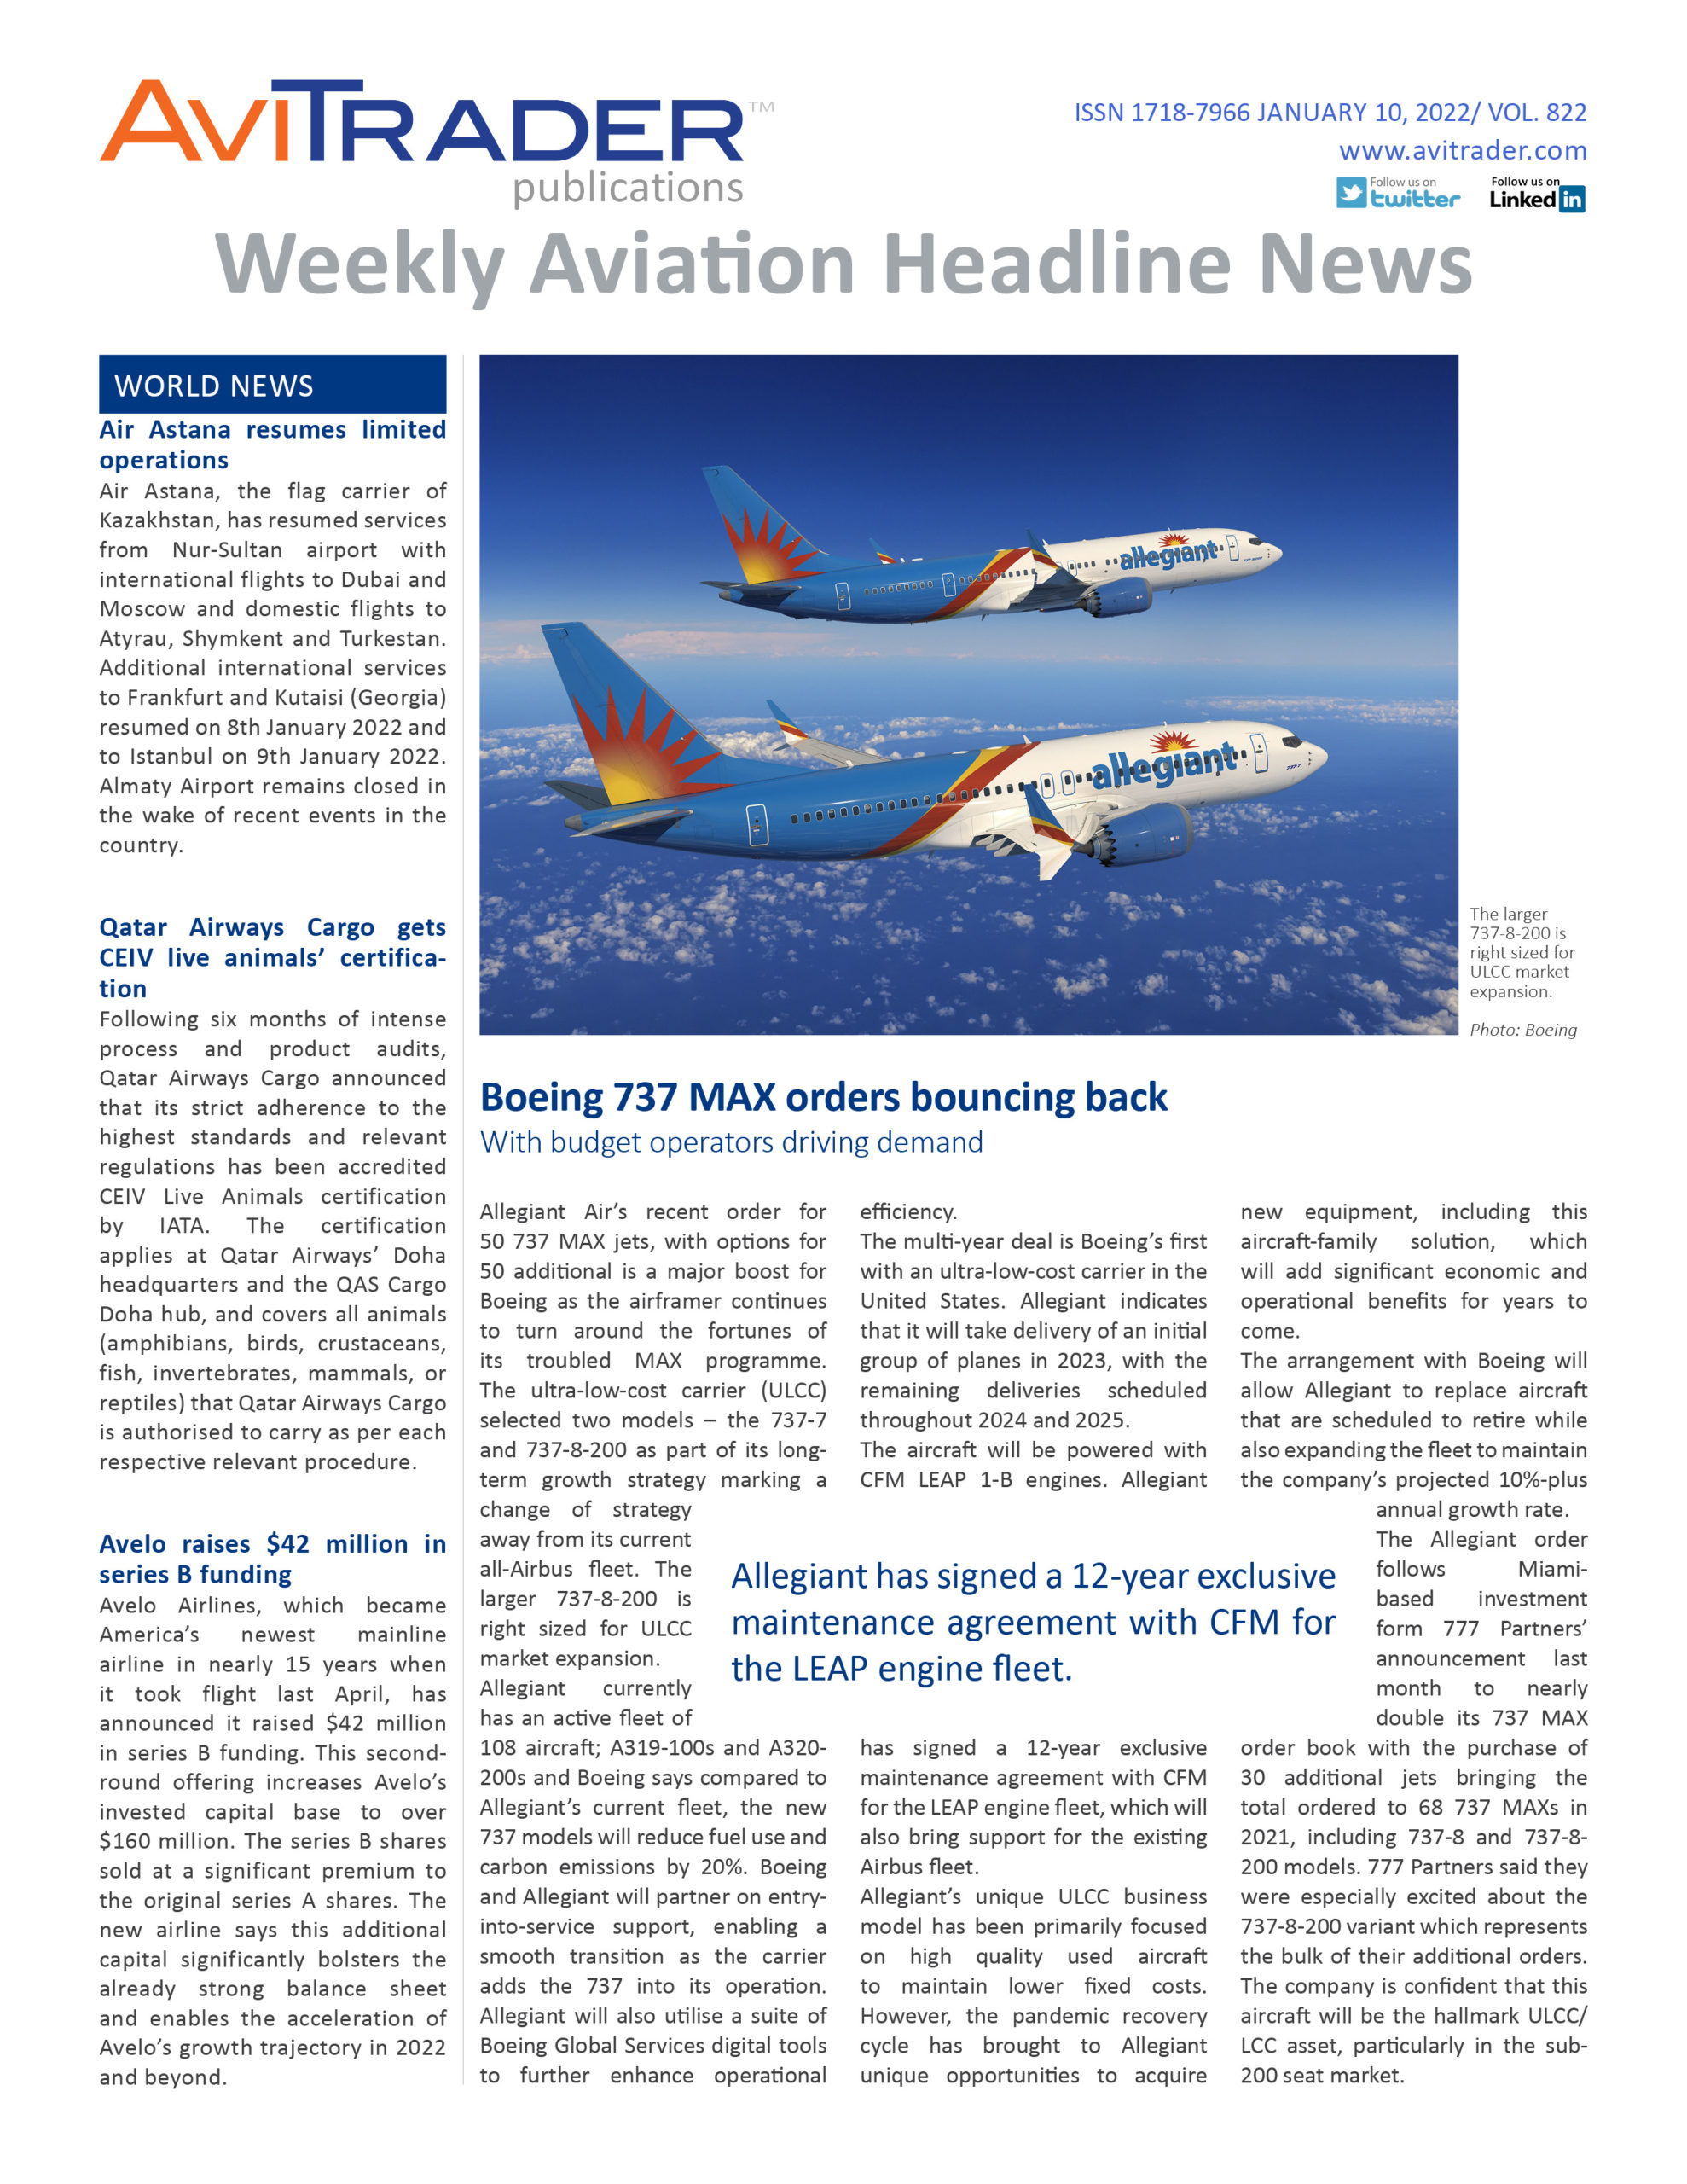 AviTrader_Weekly_Headline_News_Cover_2022-01-10